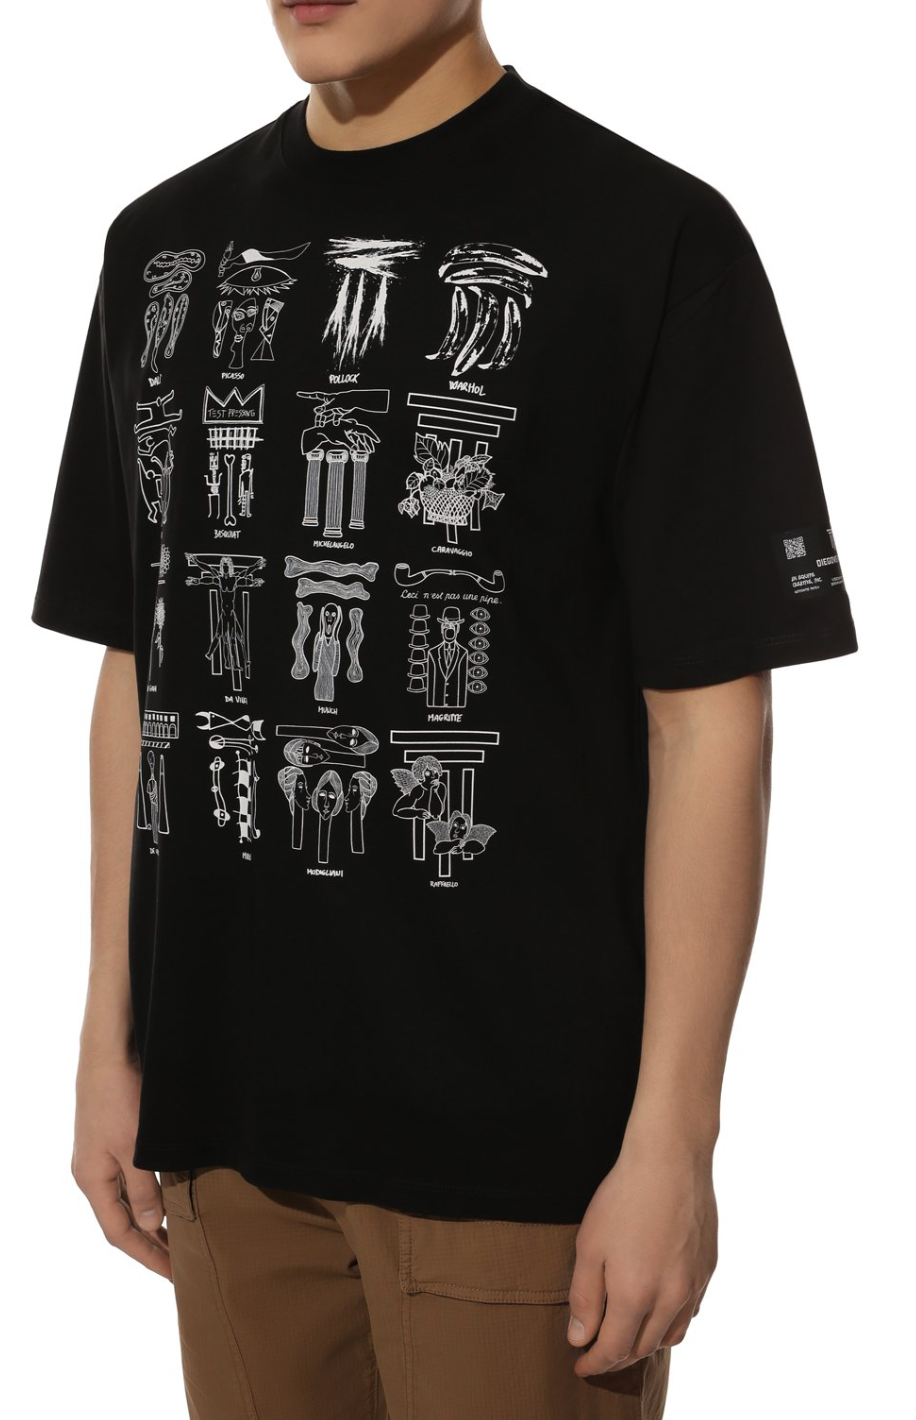 Italian Designer Cotton T-Shirt in Sleek Black